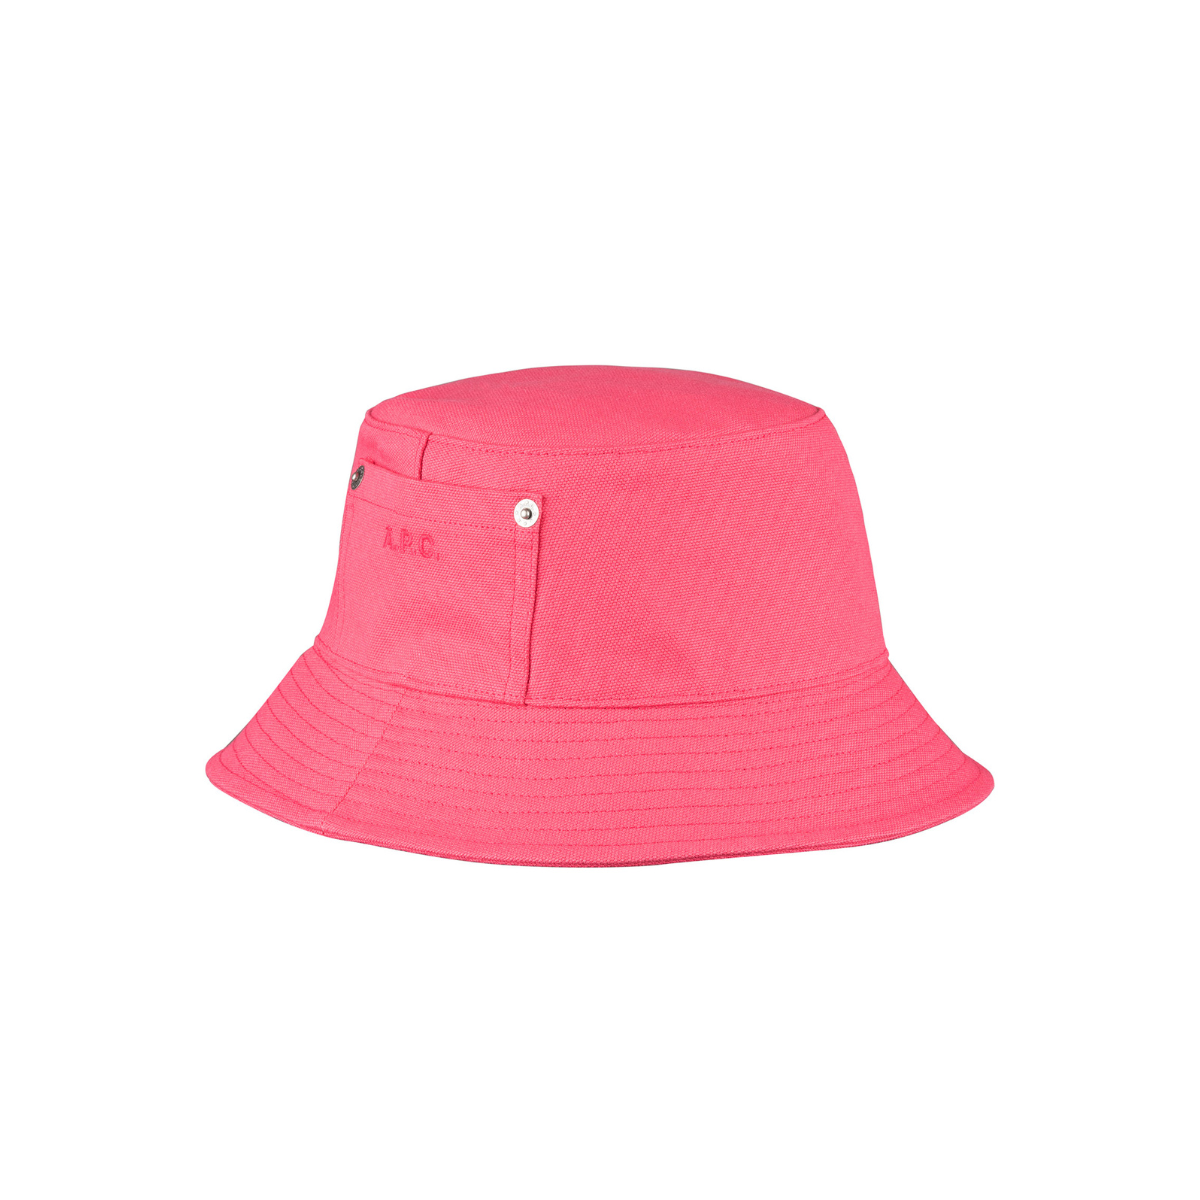 A.P.C. | bucket hats for men and women - Thais | Framboise | kapok